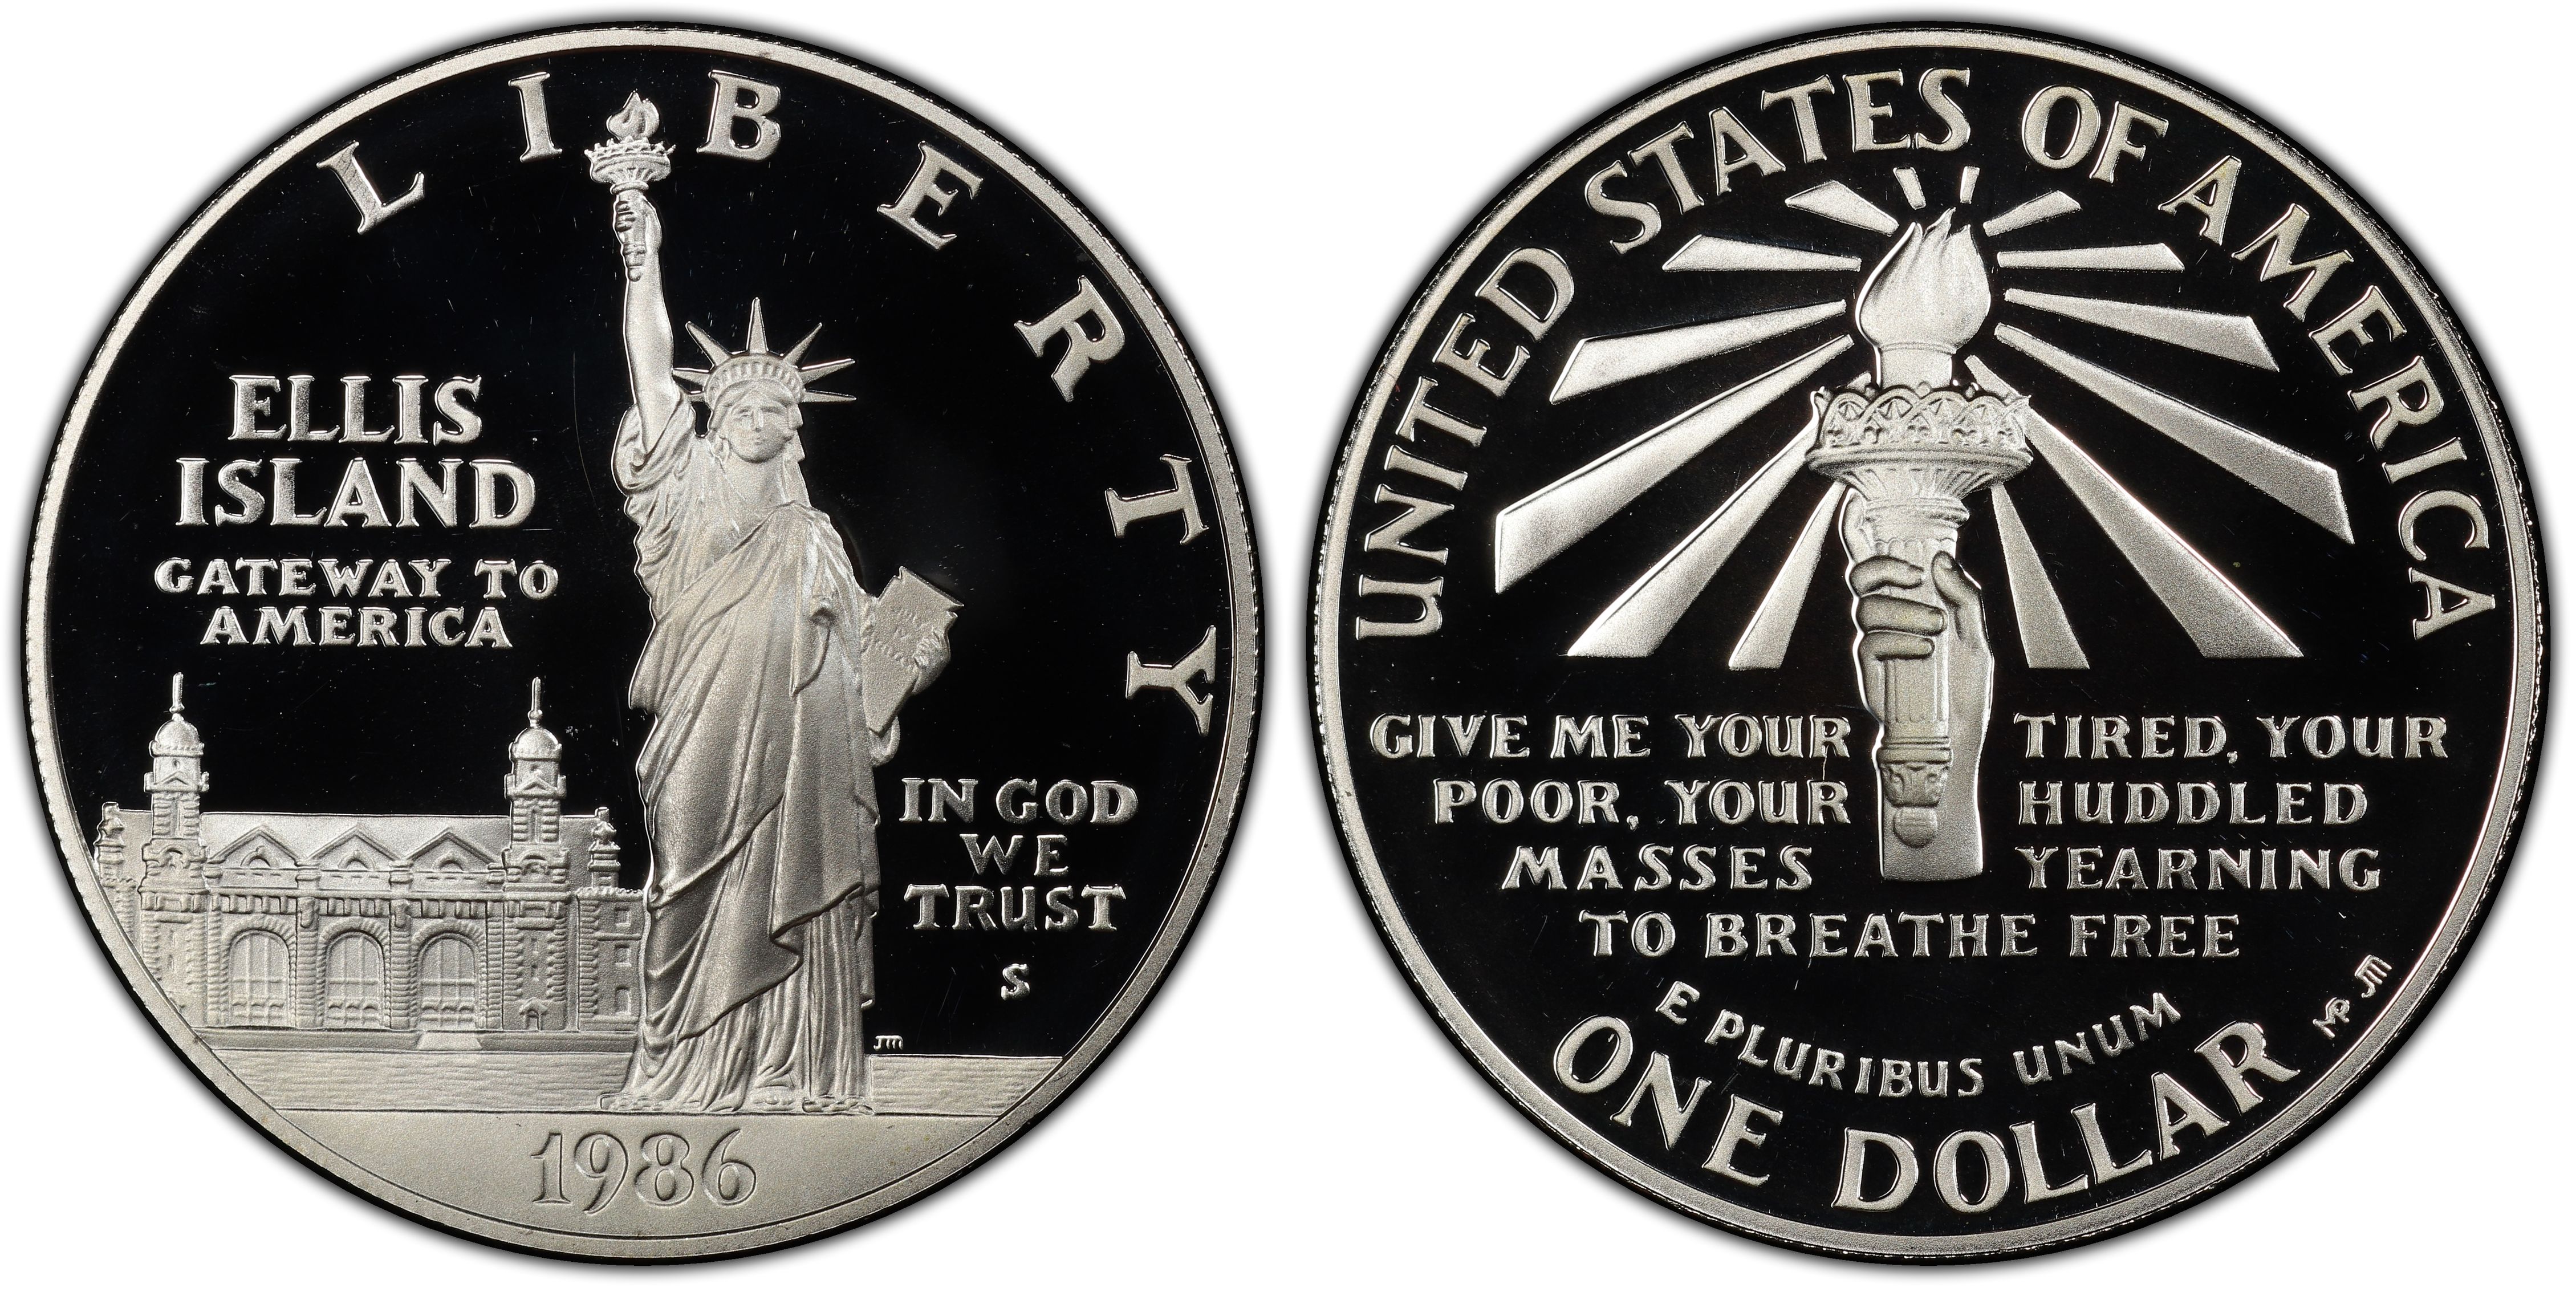 1986 P Statute of Liberty Ellis Island Silver Commemorative Dollar $1 Brilliant Uncirculated US Mint 